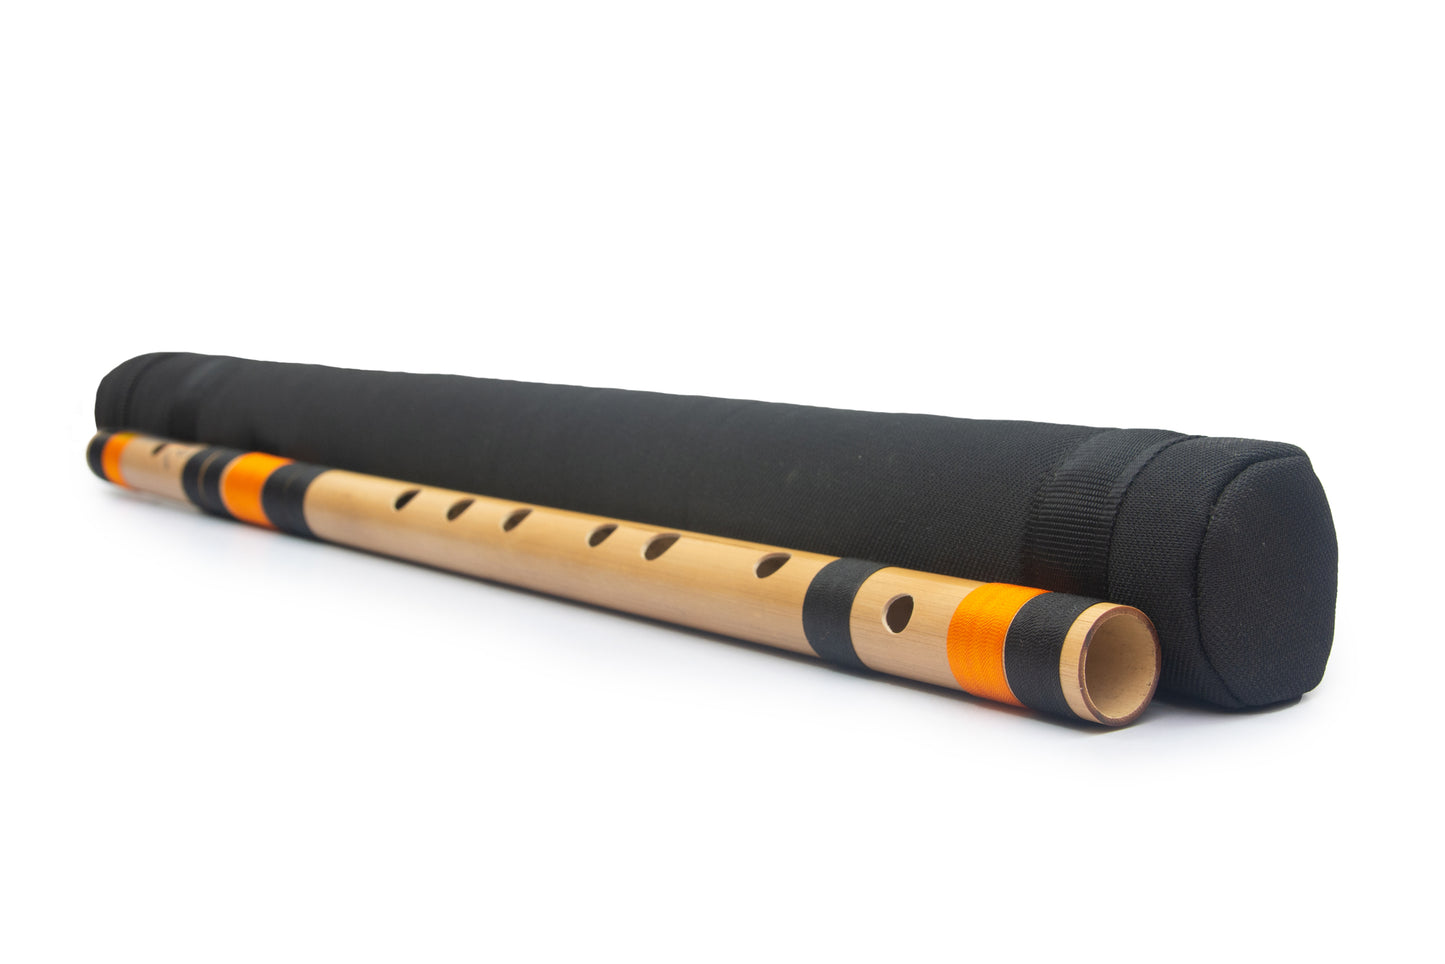 Radhe Flutes Bamboo A Natural Bansuri Base Octave with Hard Cover 23"inches